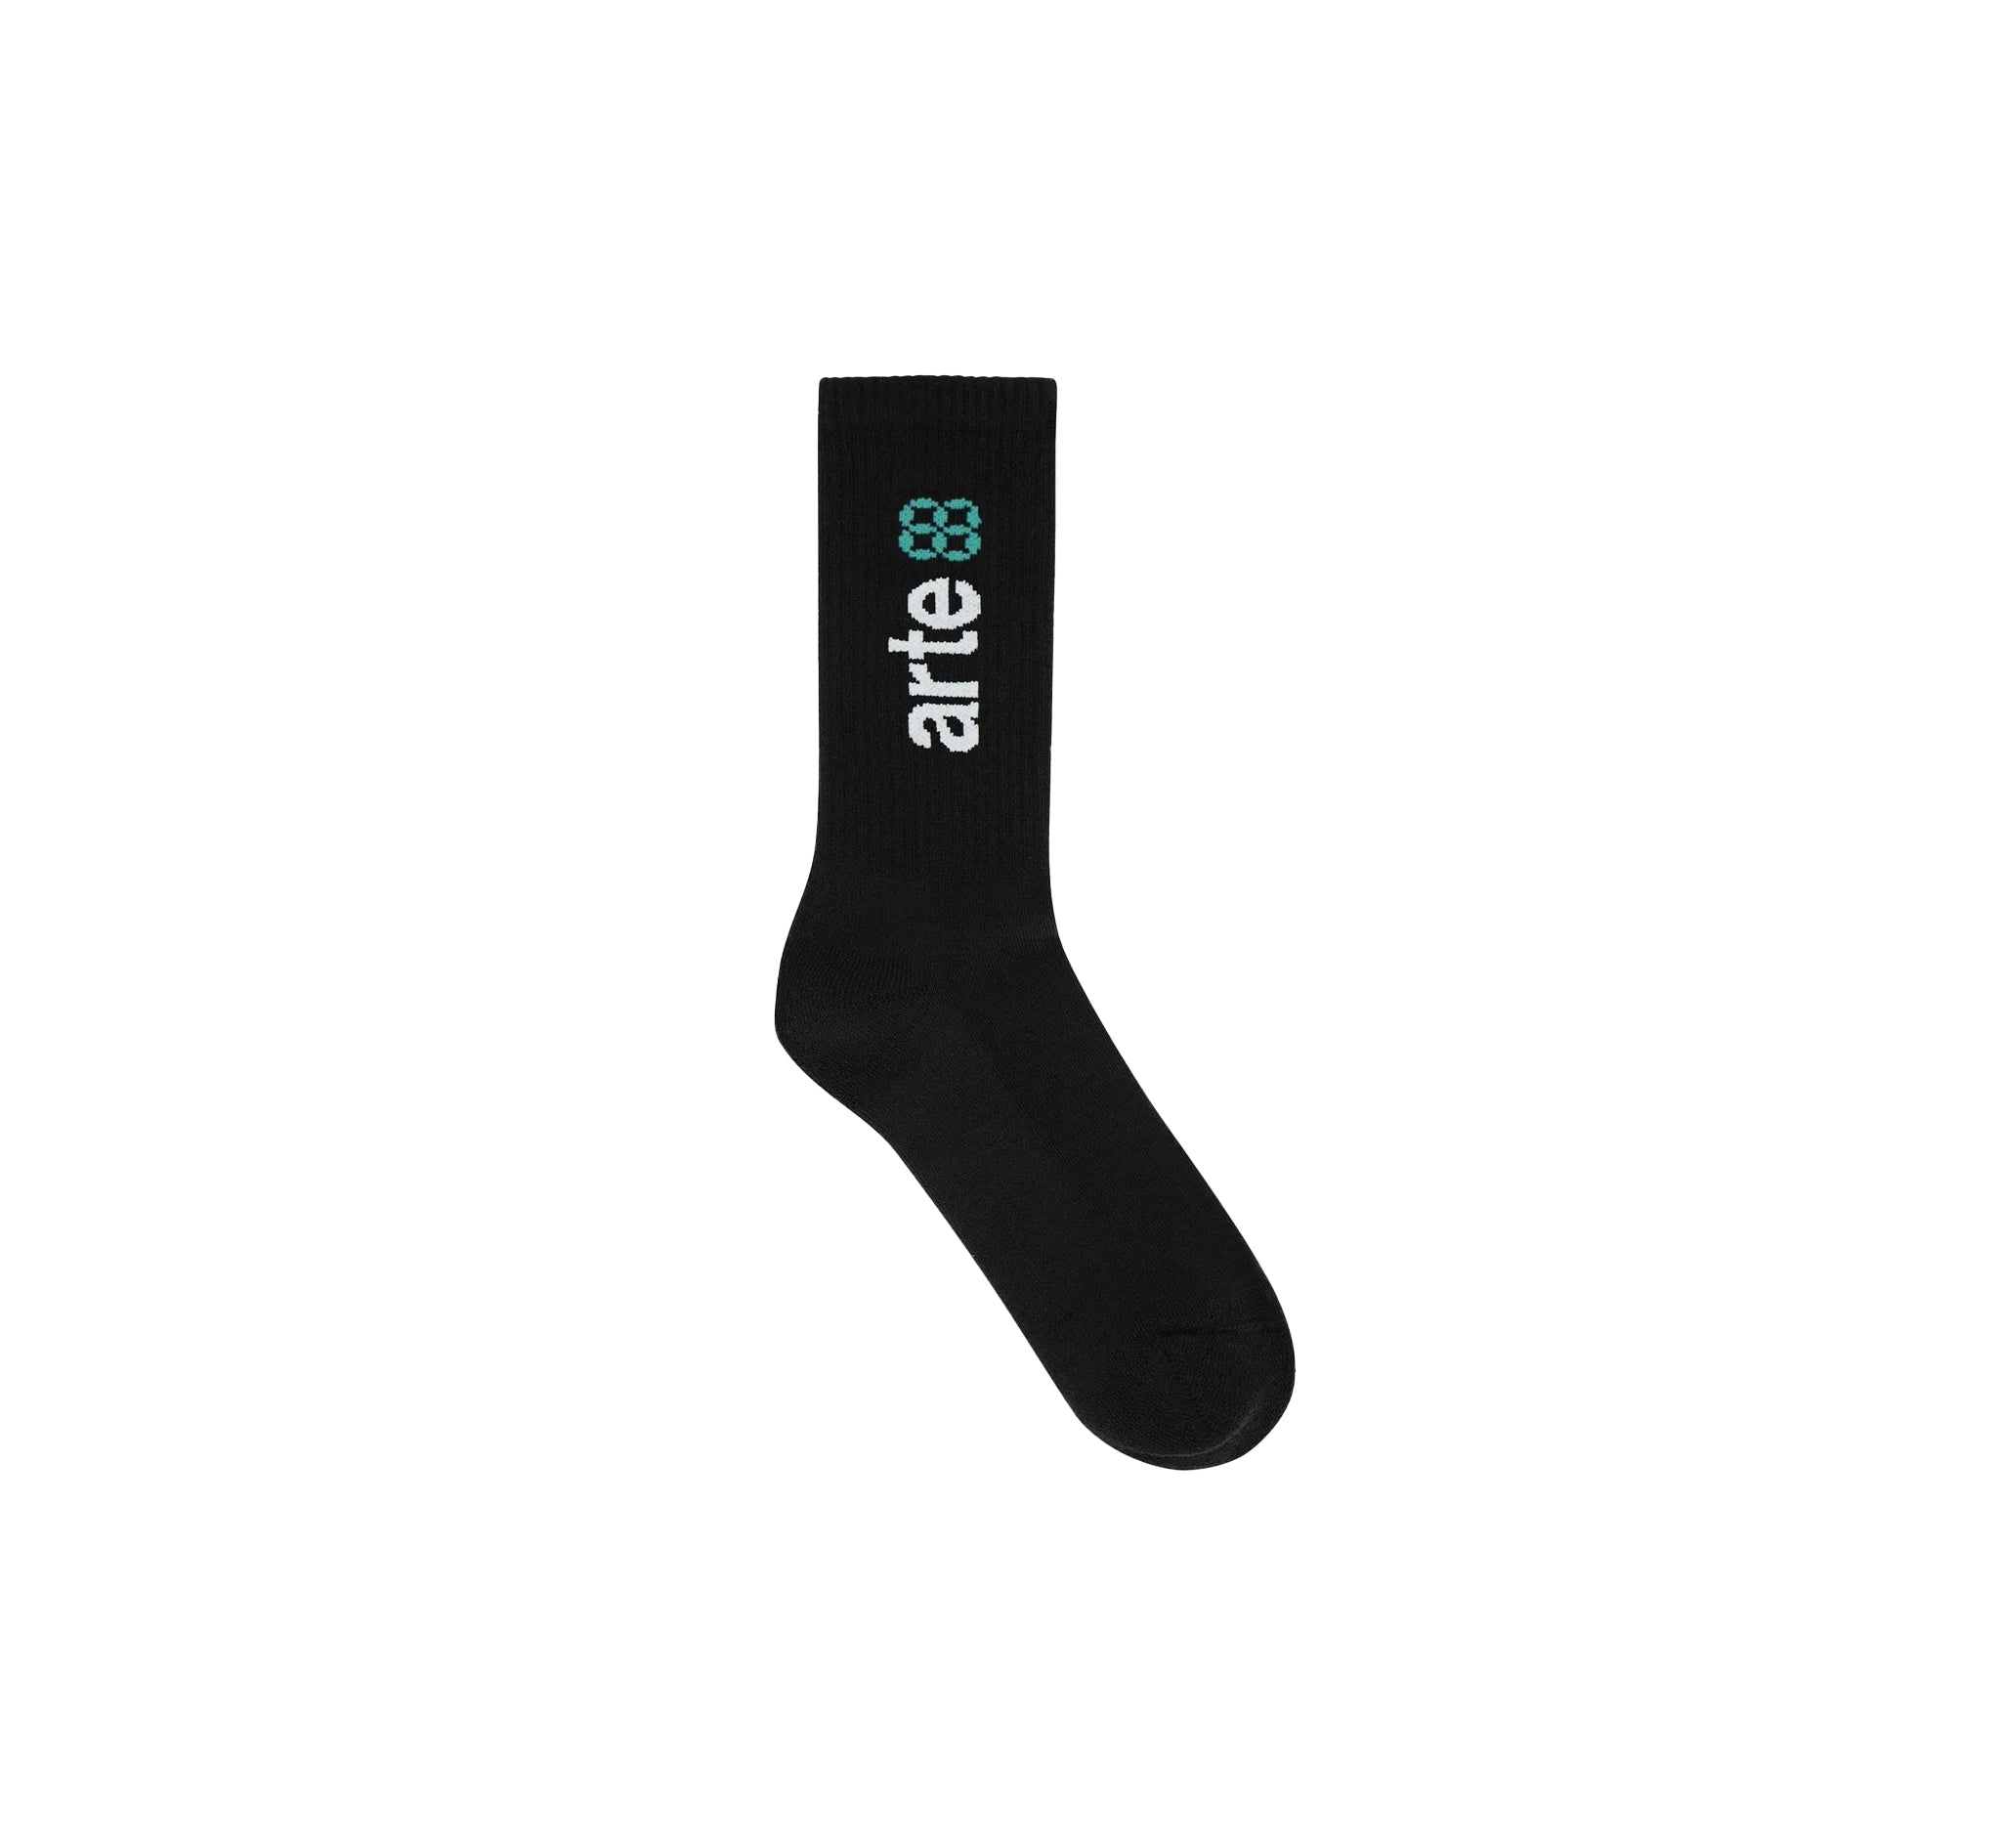 Arte ss23 logo sock, black